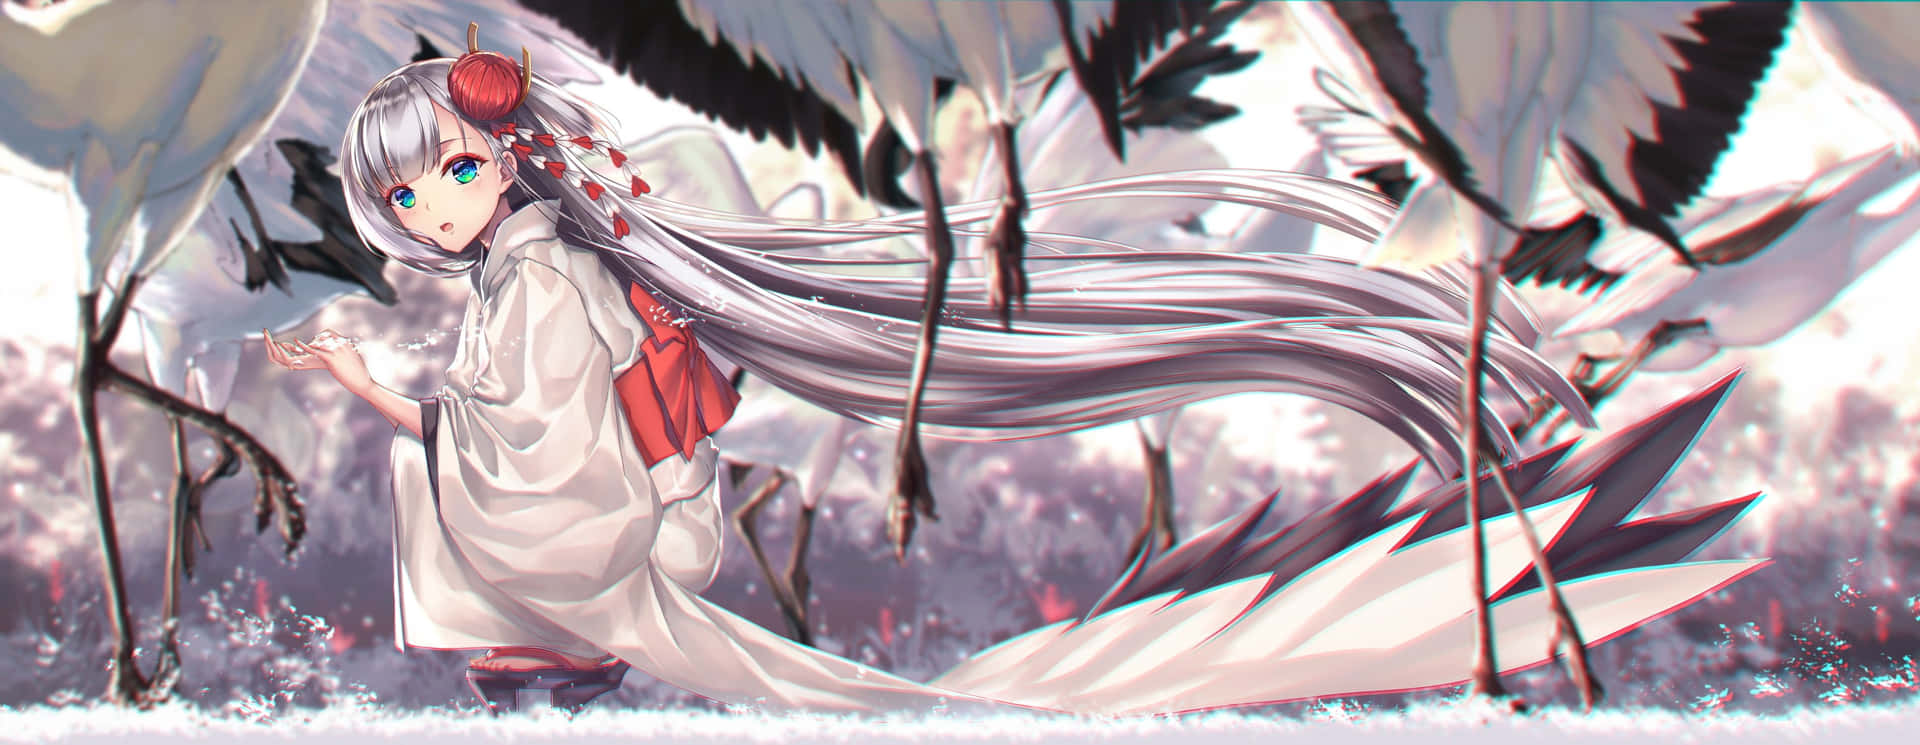 An anime girl in a snow-filled winter wonderland Wallpaper